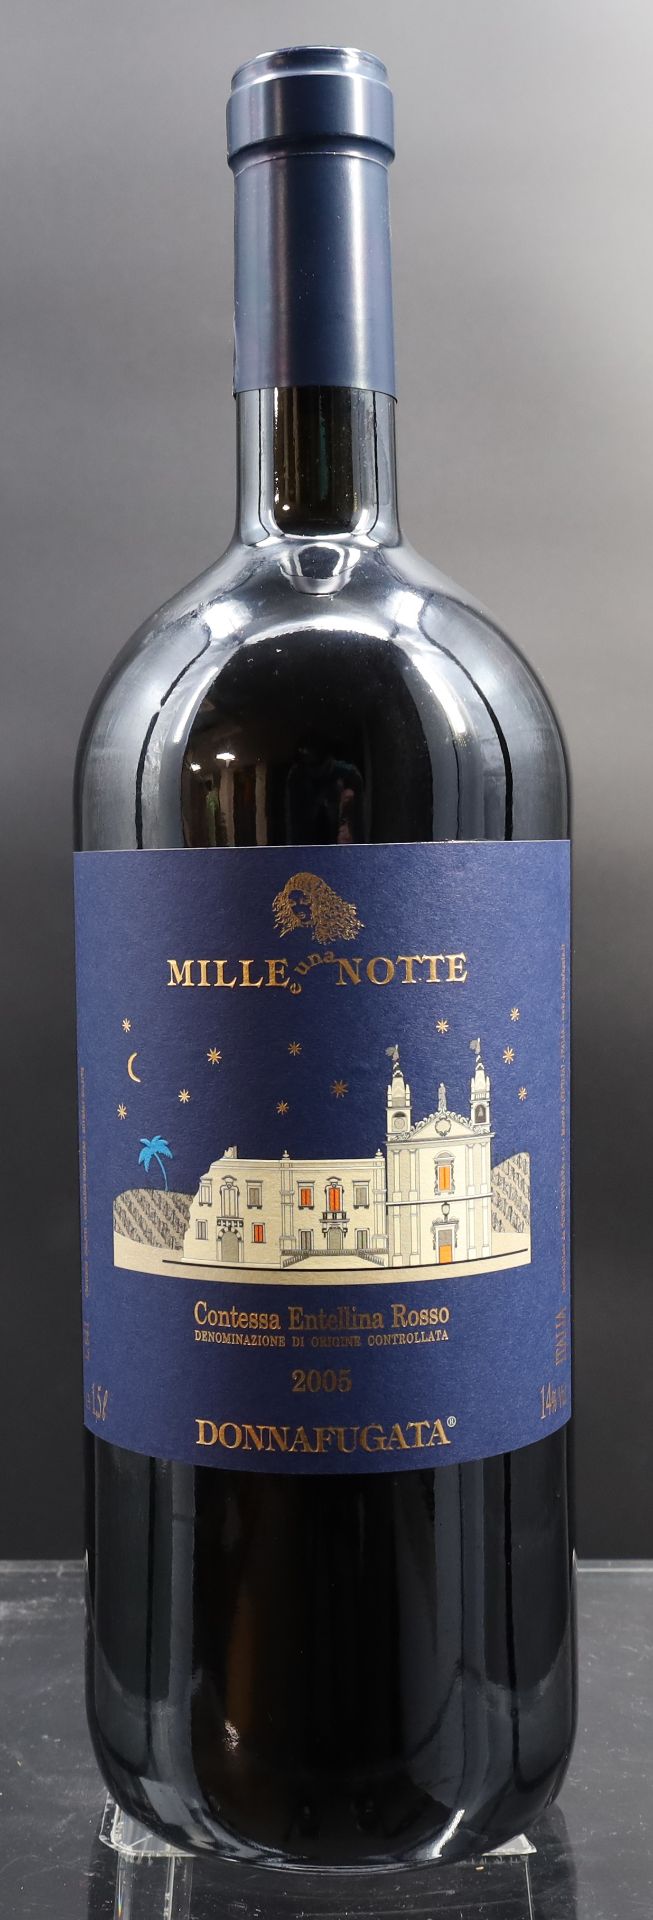 1 bottle of red wine. DONNAFUGATA. Mille e una Notte. Magnum. 2005. Italy. - Image 2 of 5